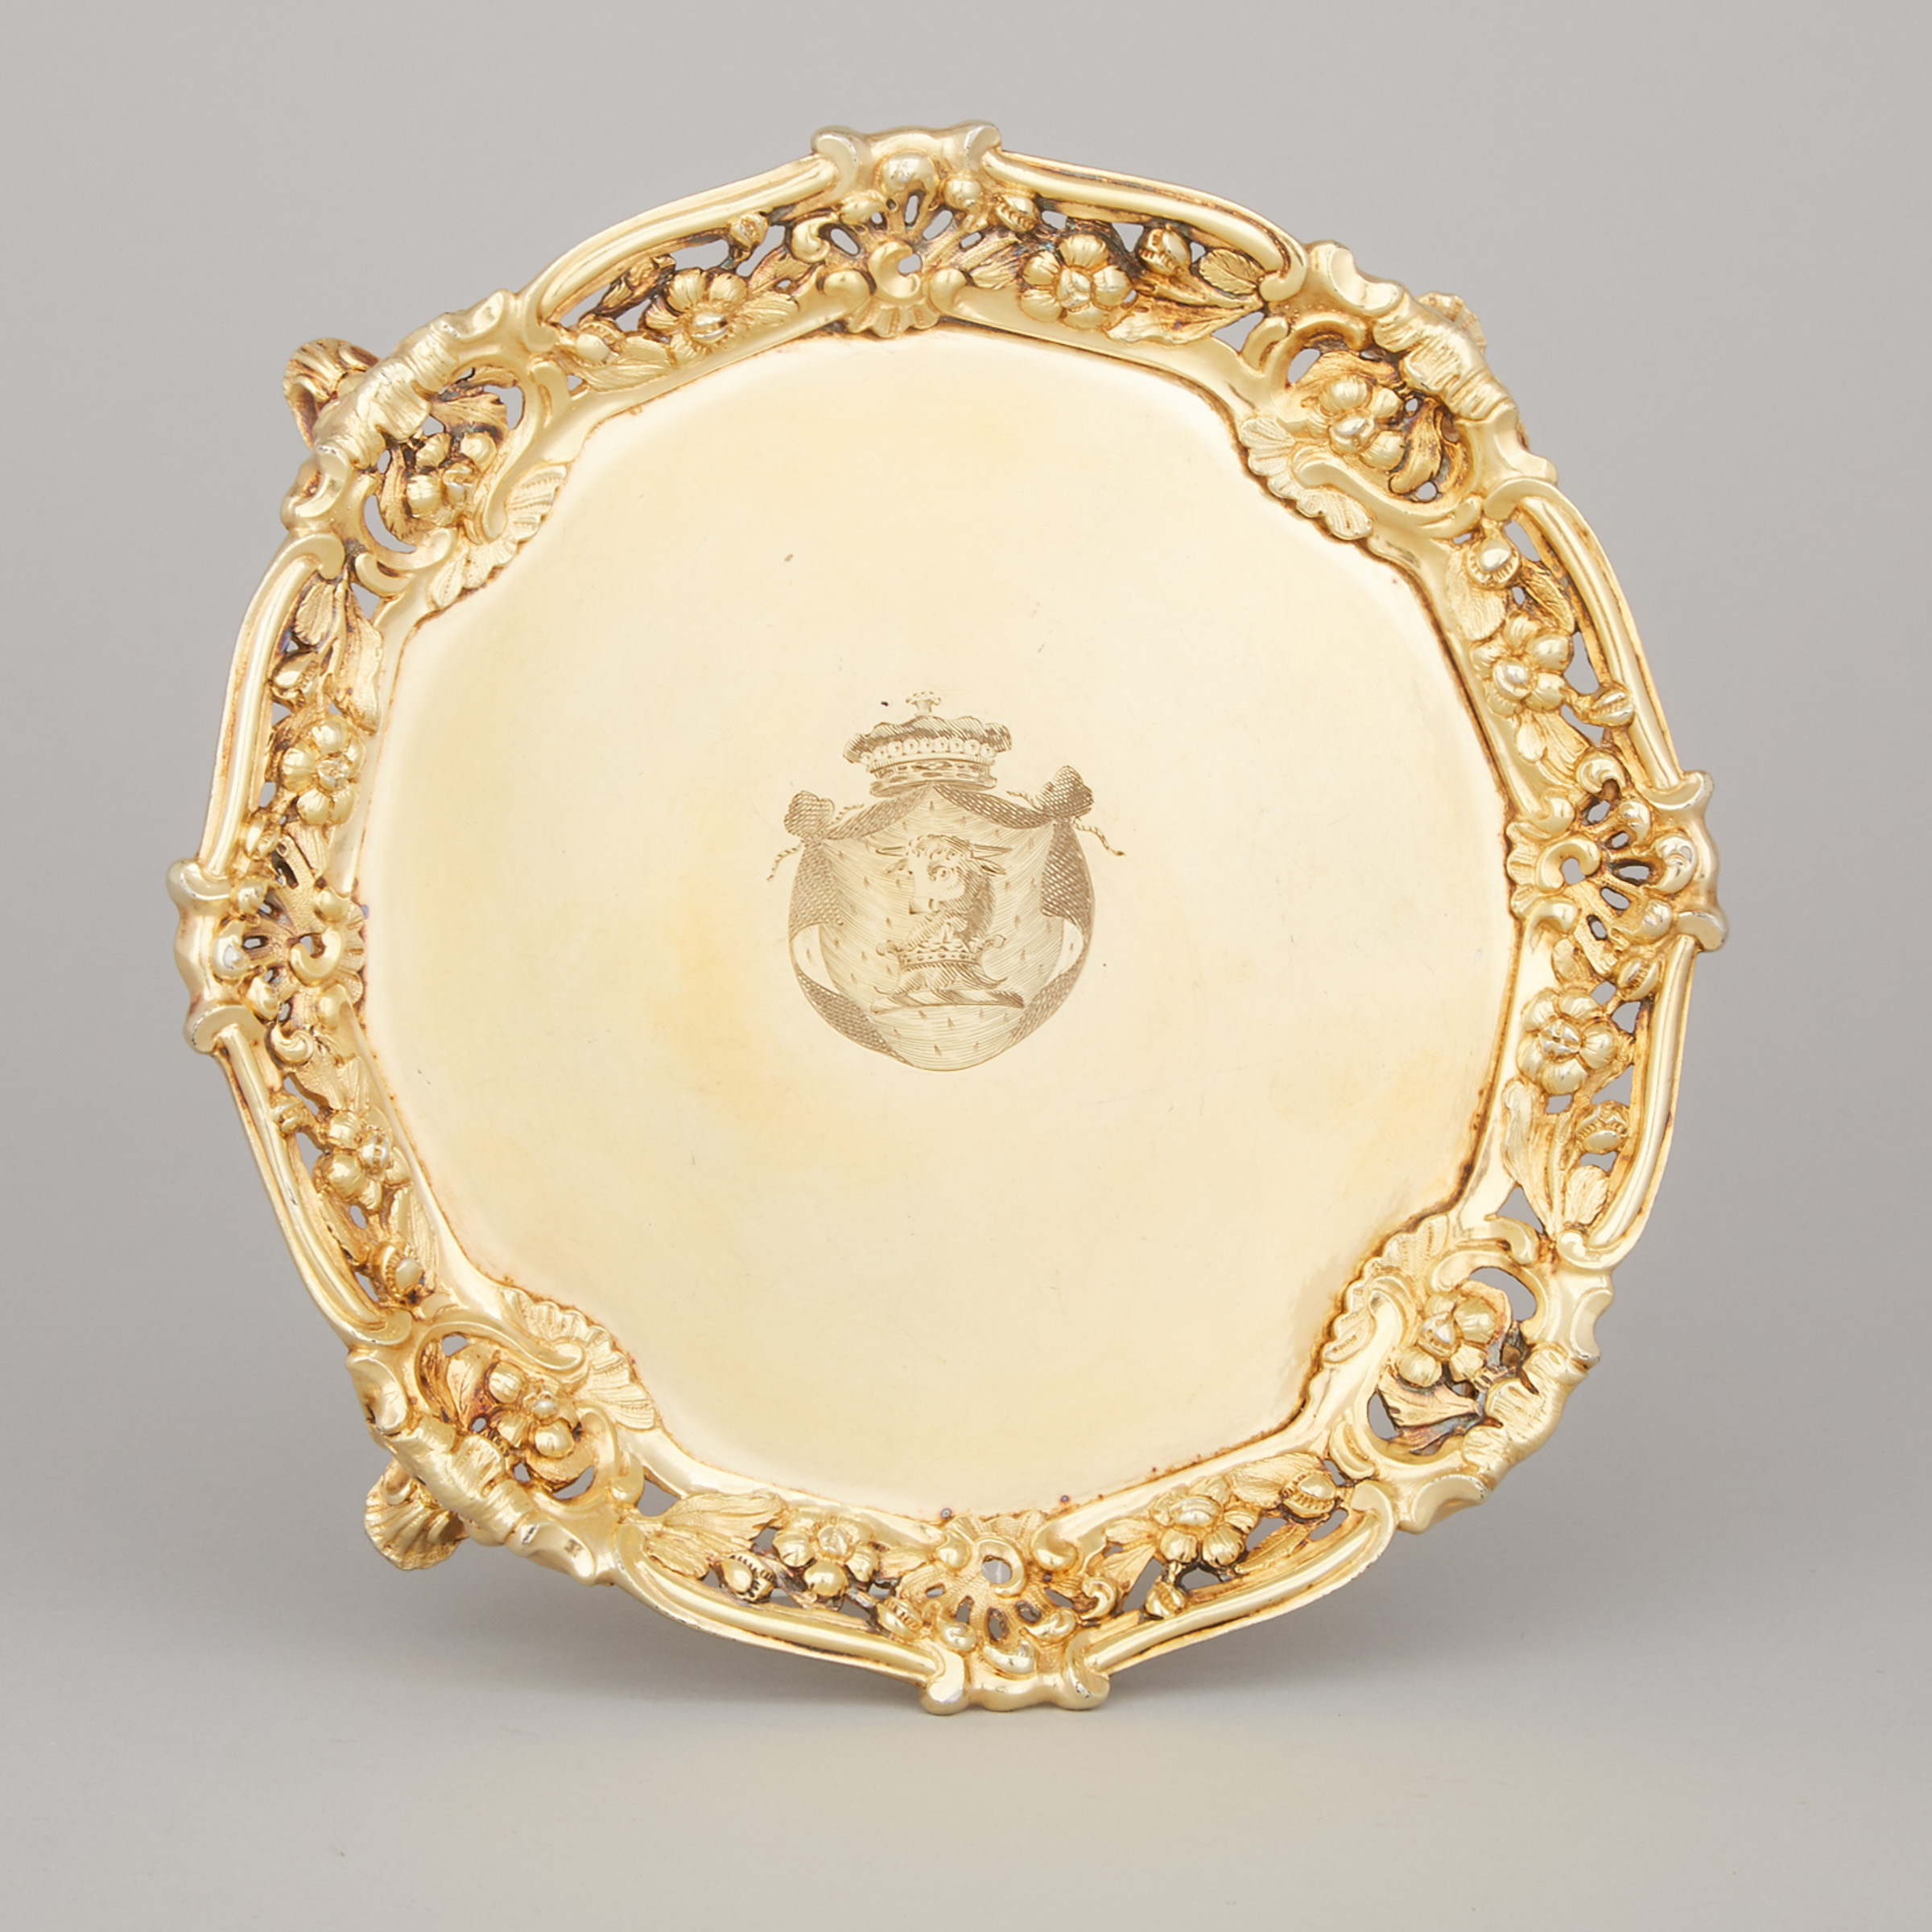 George II Silver-Gilt Shaped Circular Salver, probably William Cripps, London, 1758